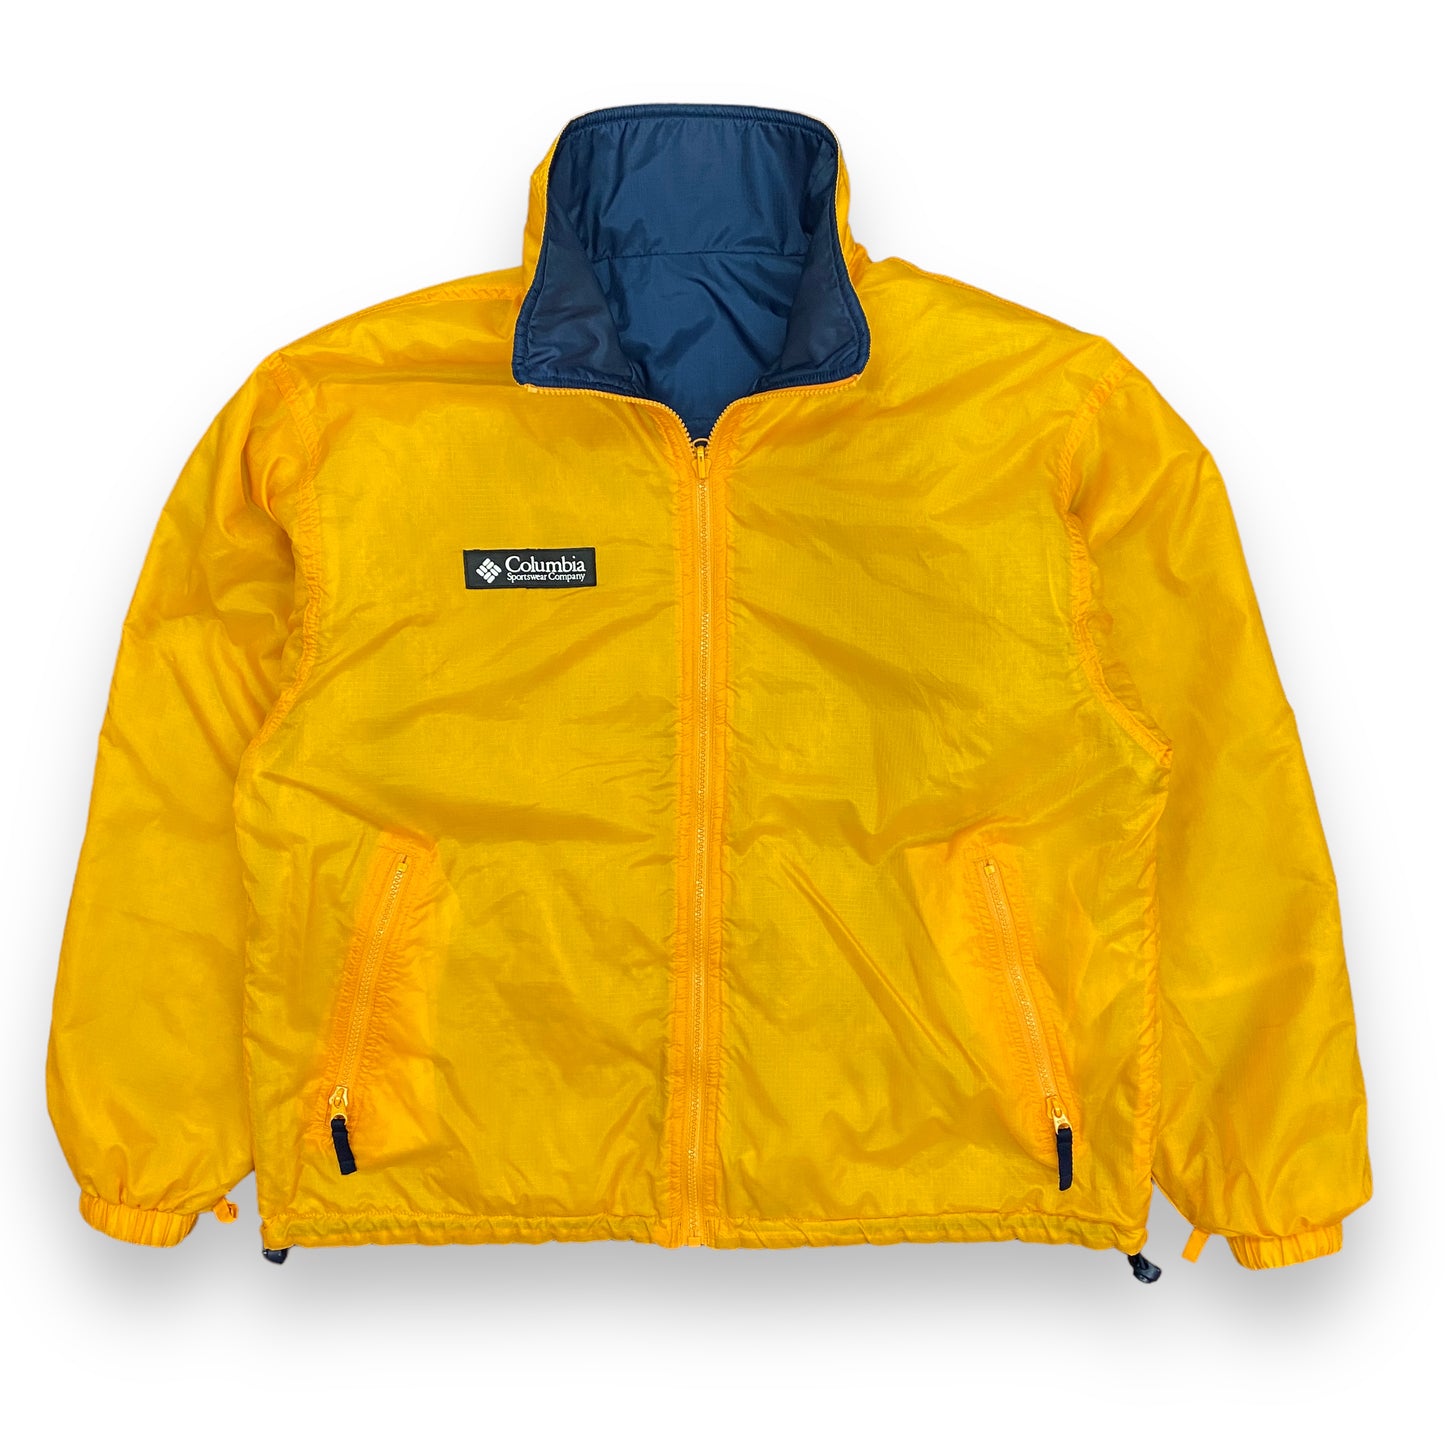 Vintage 1990s Columbia Sportswear Reversible & Packable Puffer Jacket - Size Medium